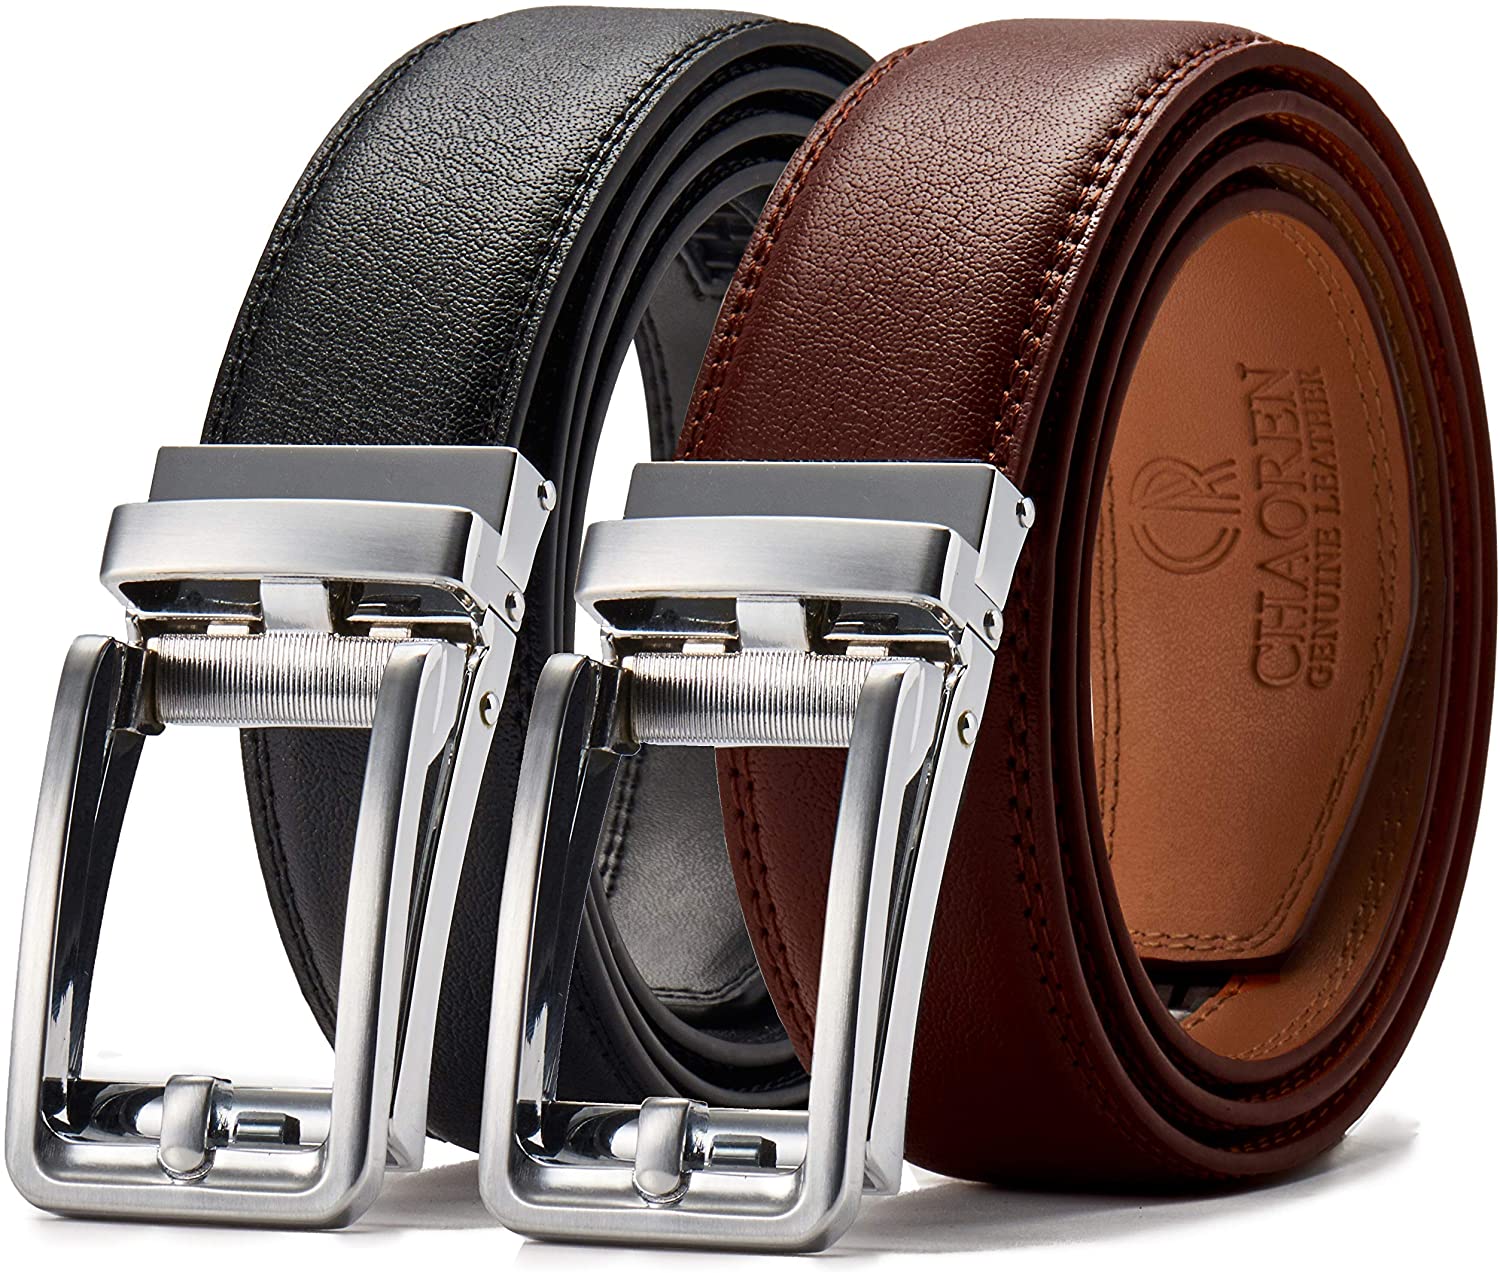 Chaoren Click Adjustable Belt Comfort with Slide Buckle Trim to Exact Fit Leather Ratchet Dress Belt 2 Pack 1 3/8